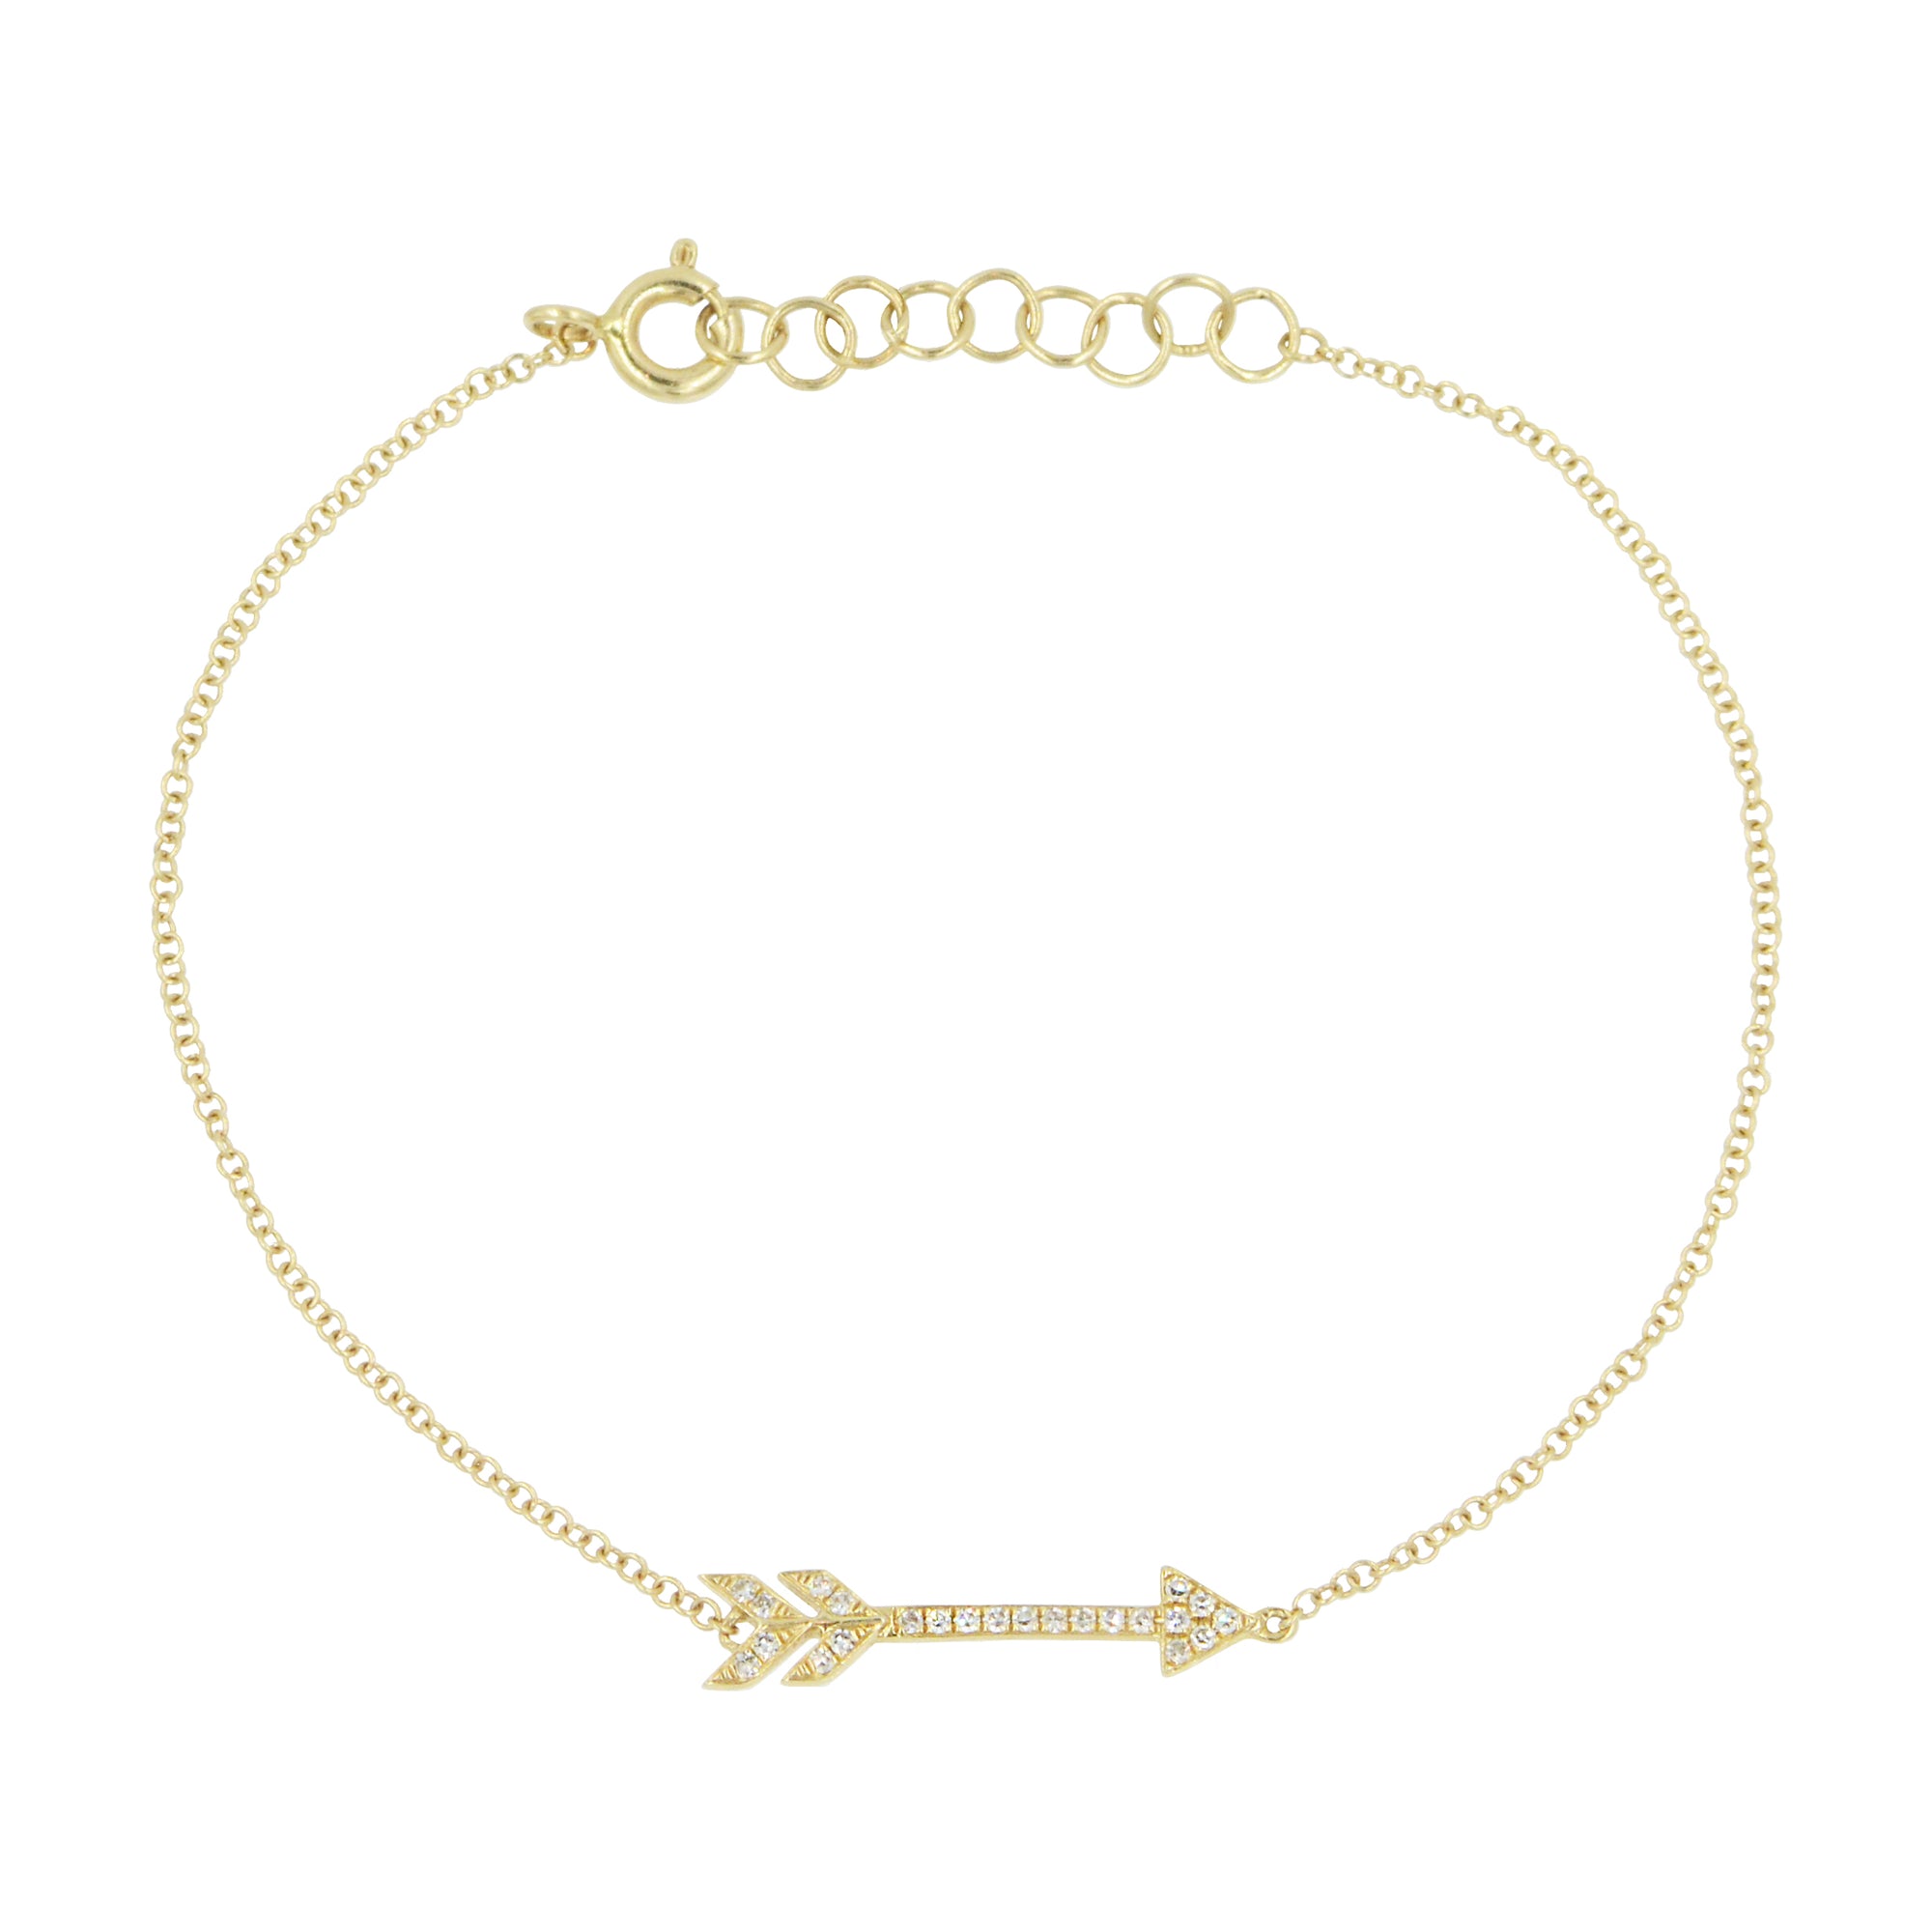 Diamond Arrow Bracelet in 14k Gold With Adjustable Clasp